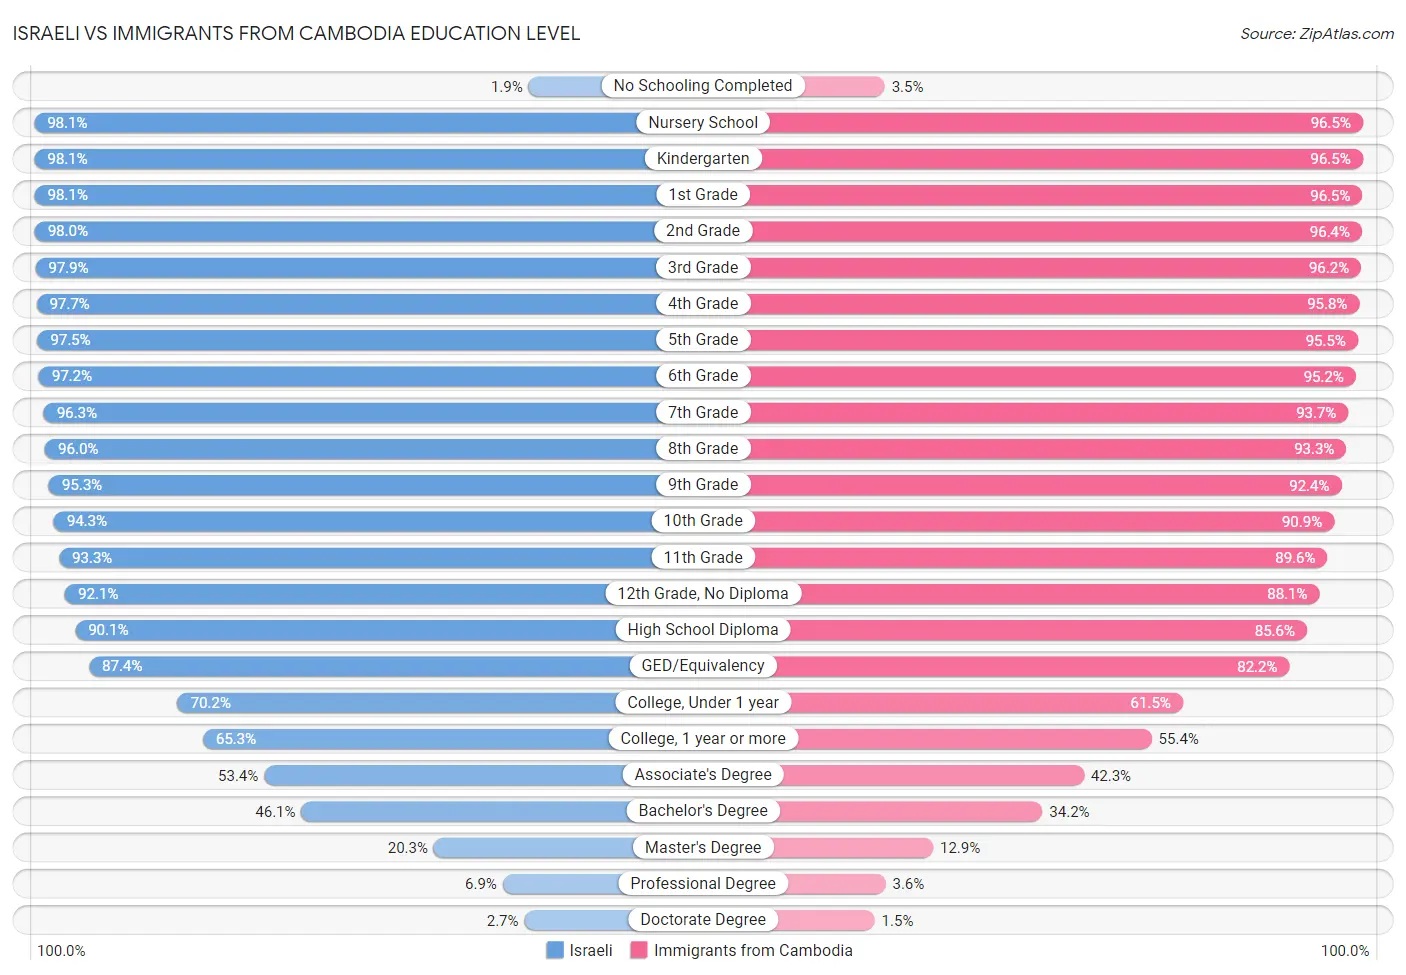 Israeli vs Immigrants from Cambodia Education Level